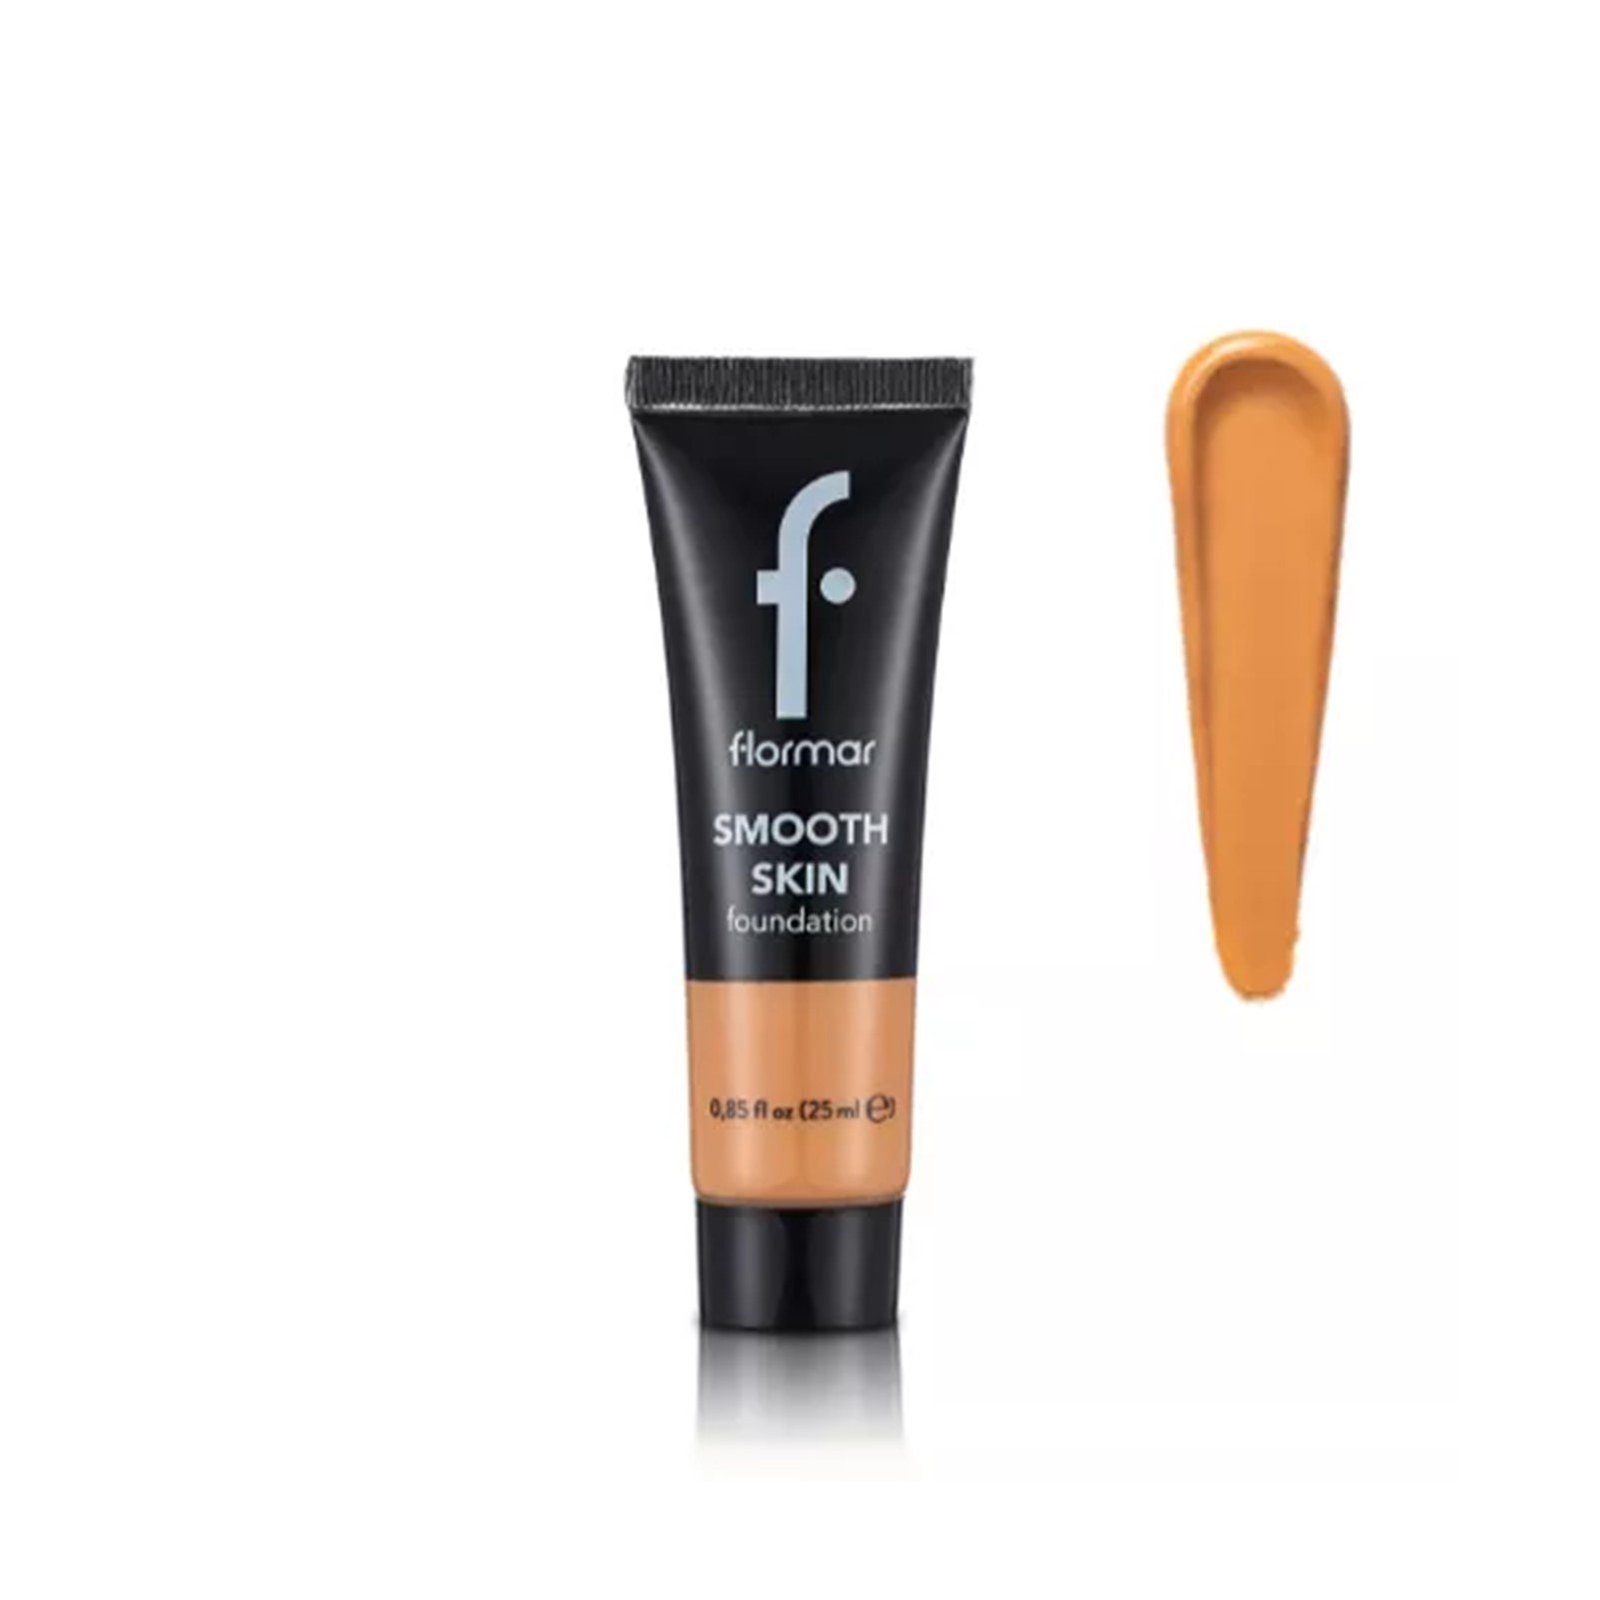 Flormar Smooth Skin Foundation 007 Golden Neutral 25ml (0.85 fl oz)